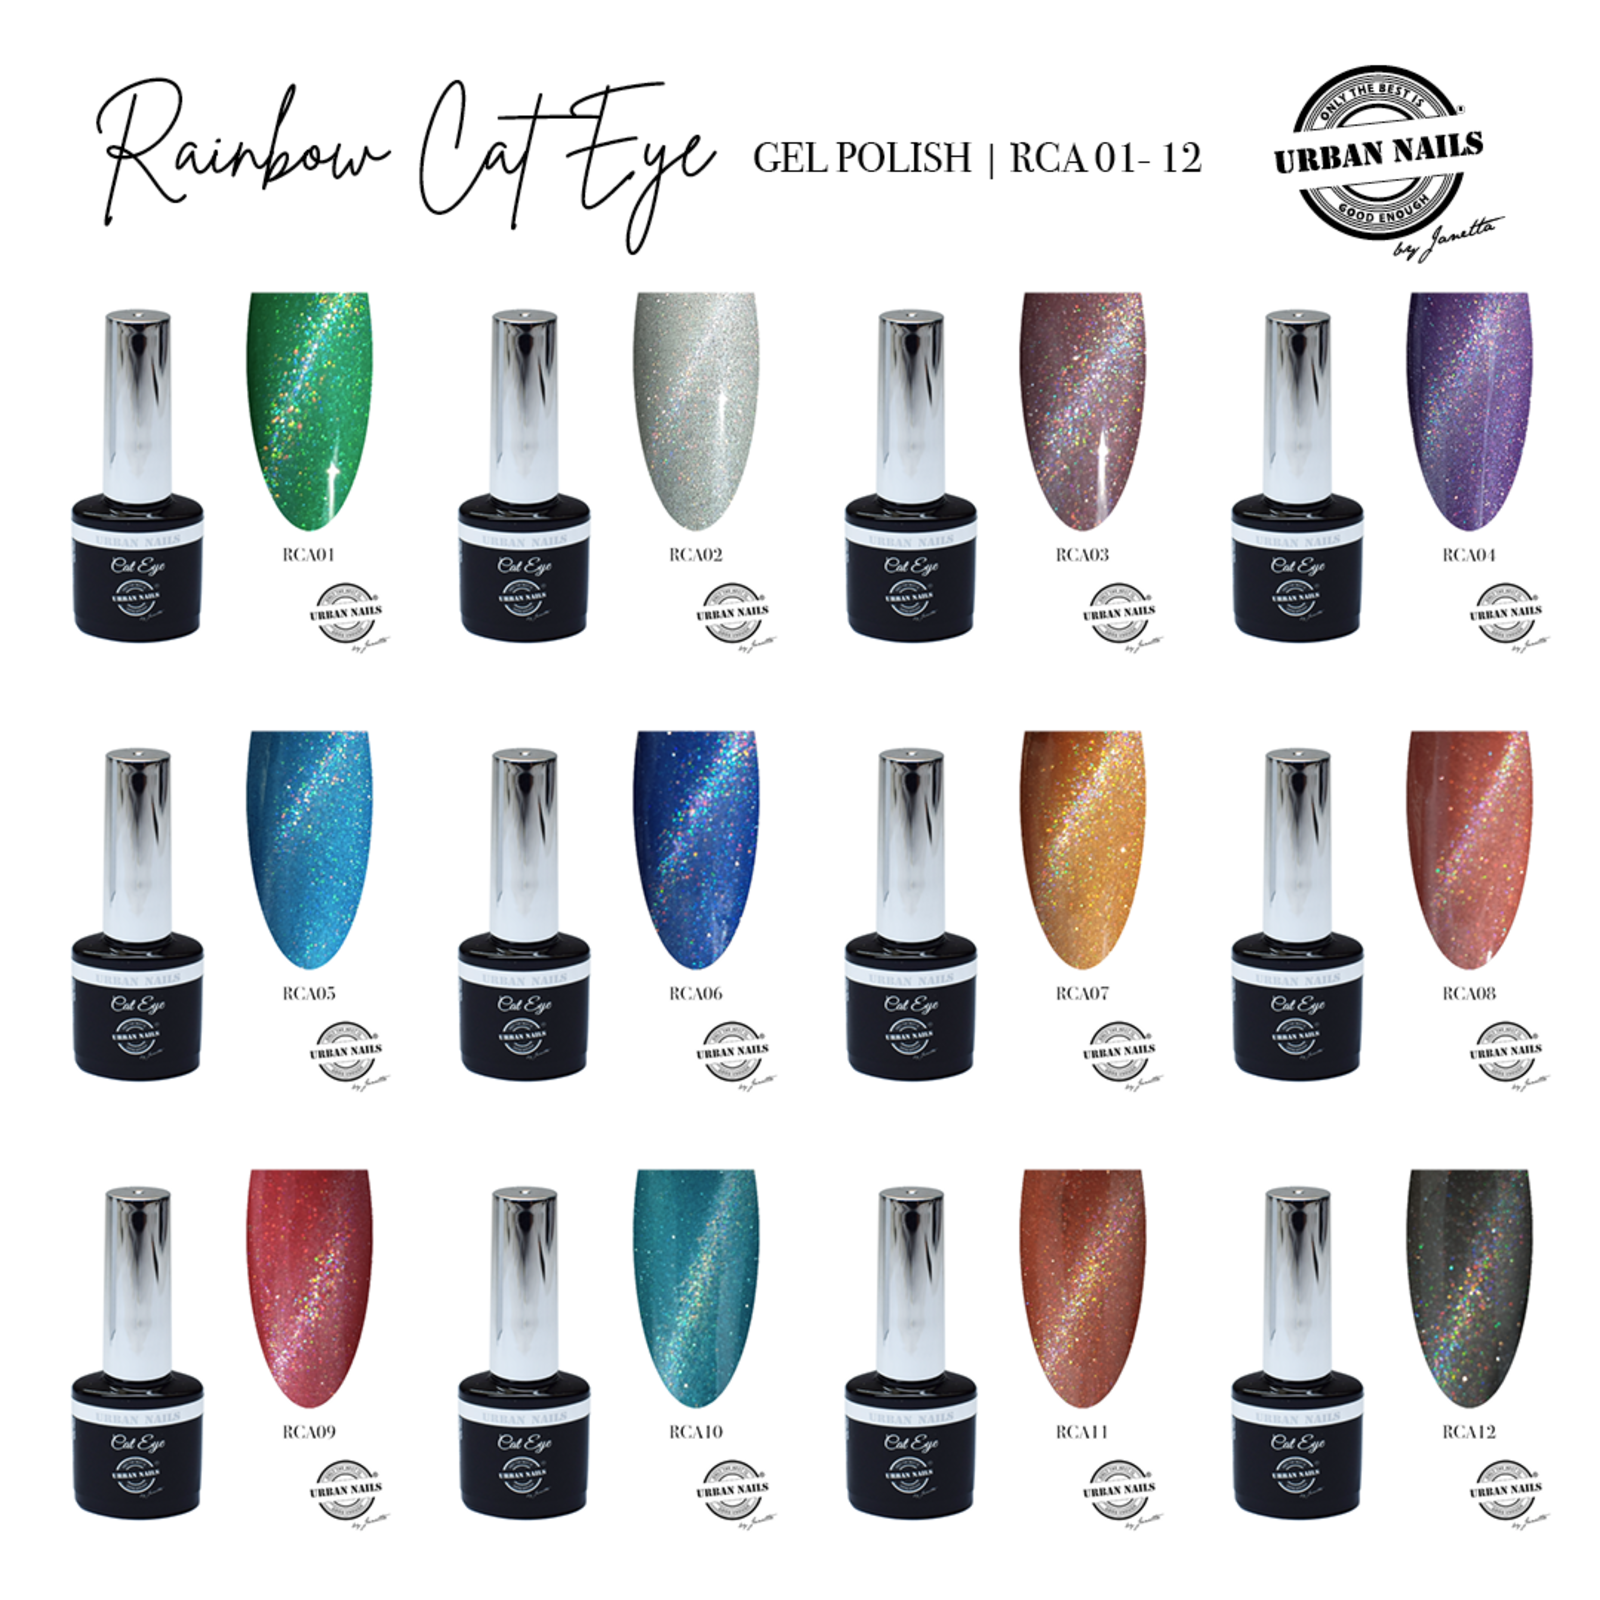 Urban nails Rainbow Cat Eye RCA-02 7,5 ml